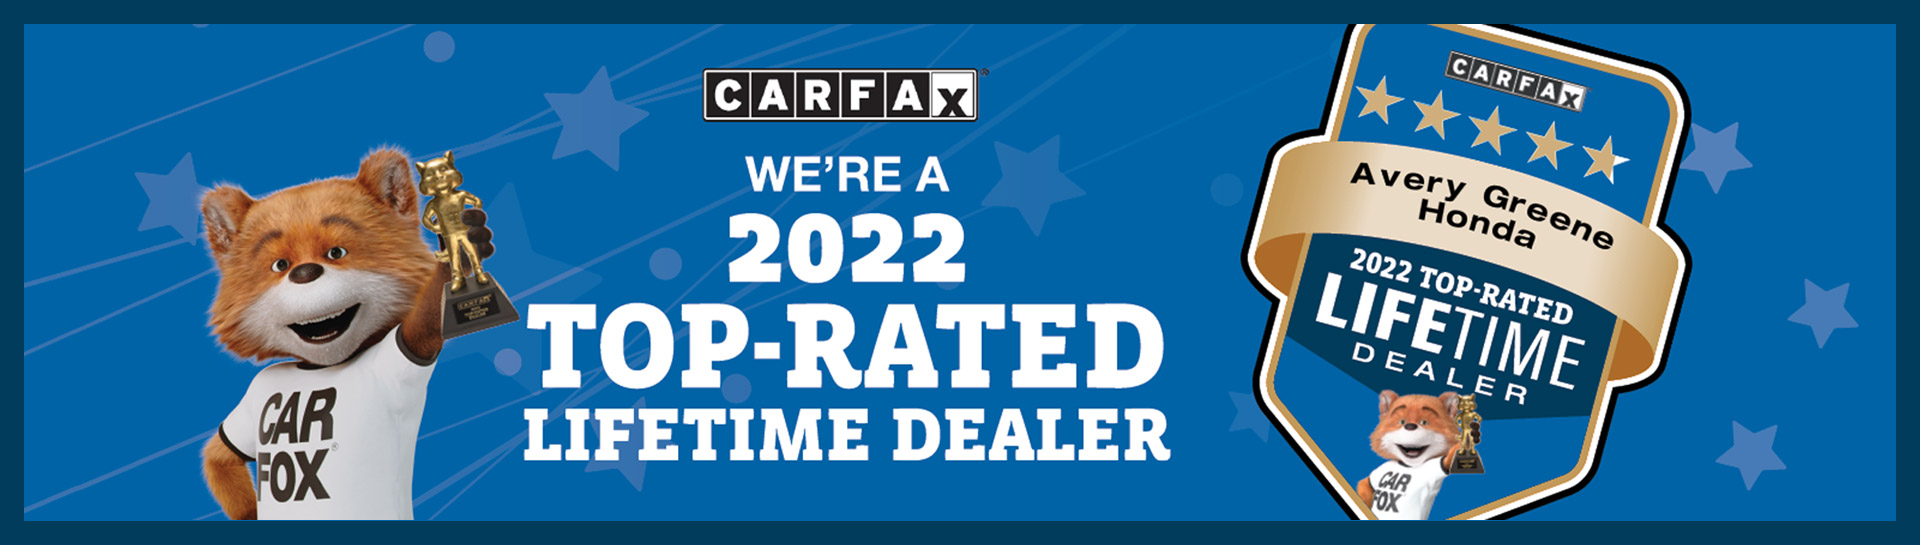 CarFax 2022 Top-Rated Lifetime Dealer